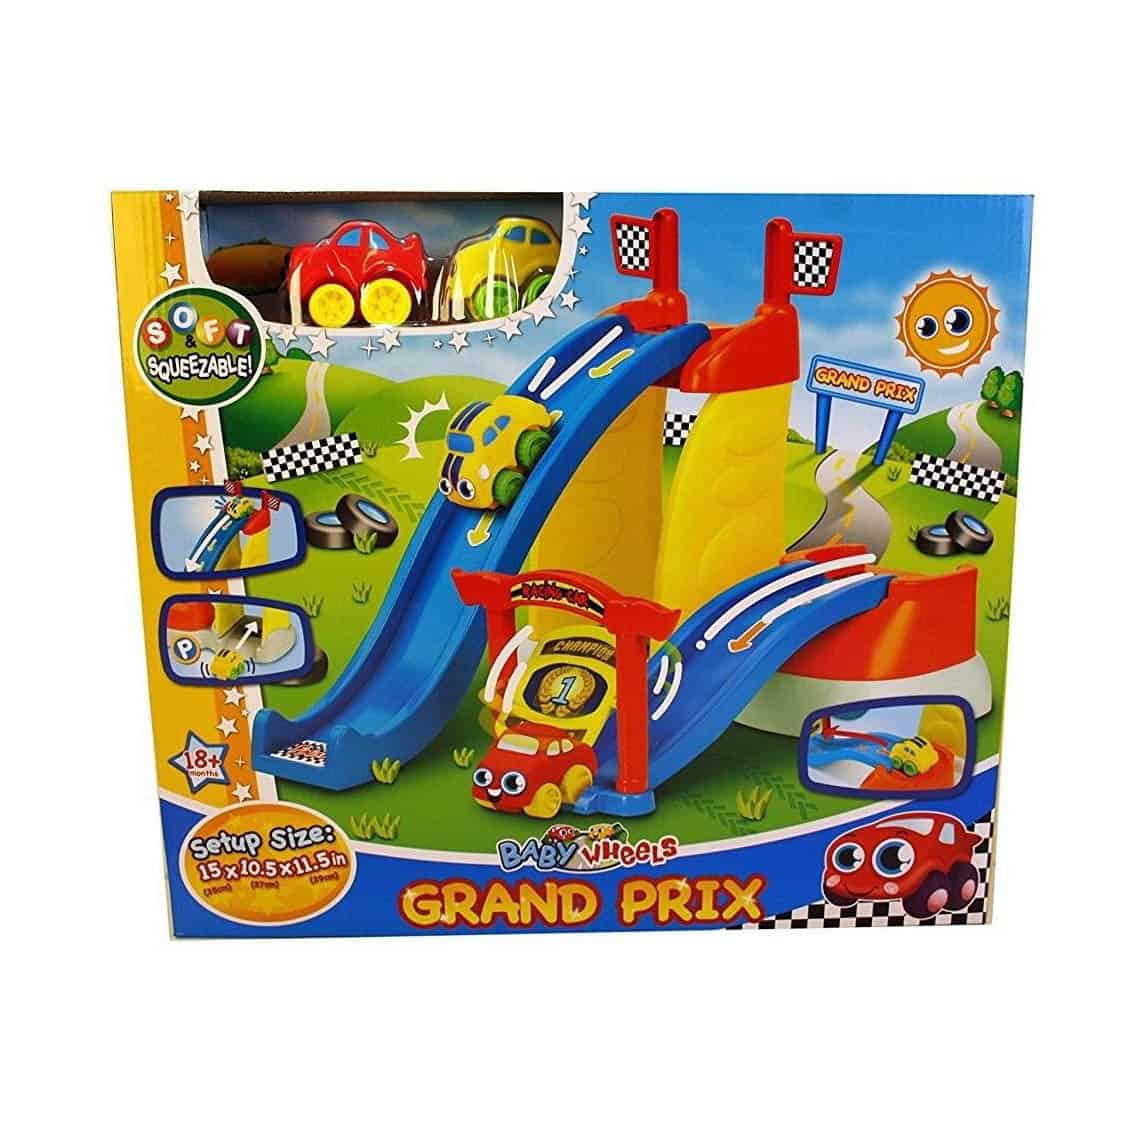 Padgett Brothers Baby Wheels Grand Prix Playset